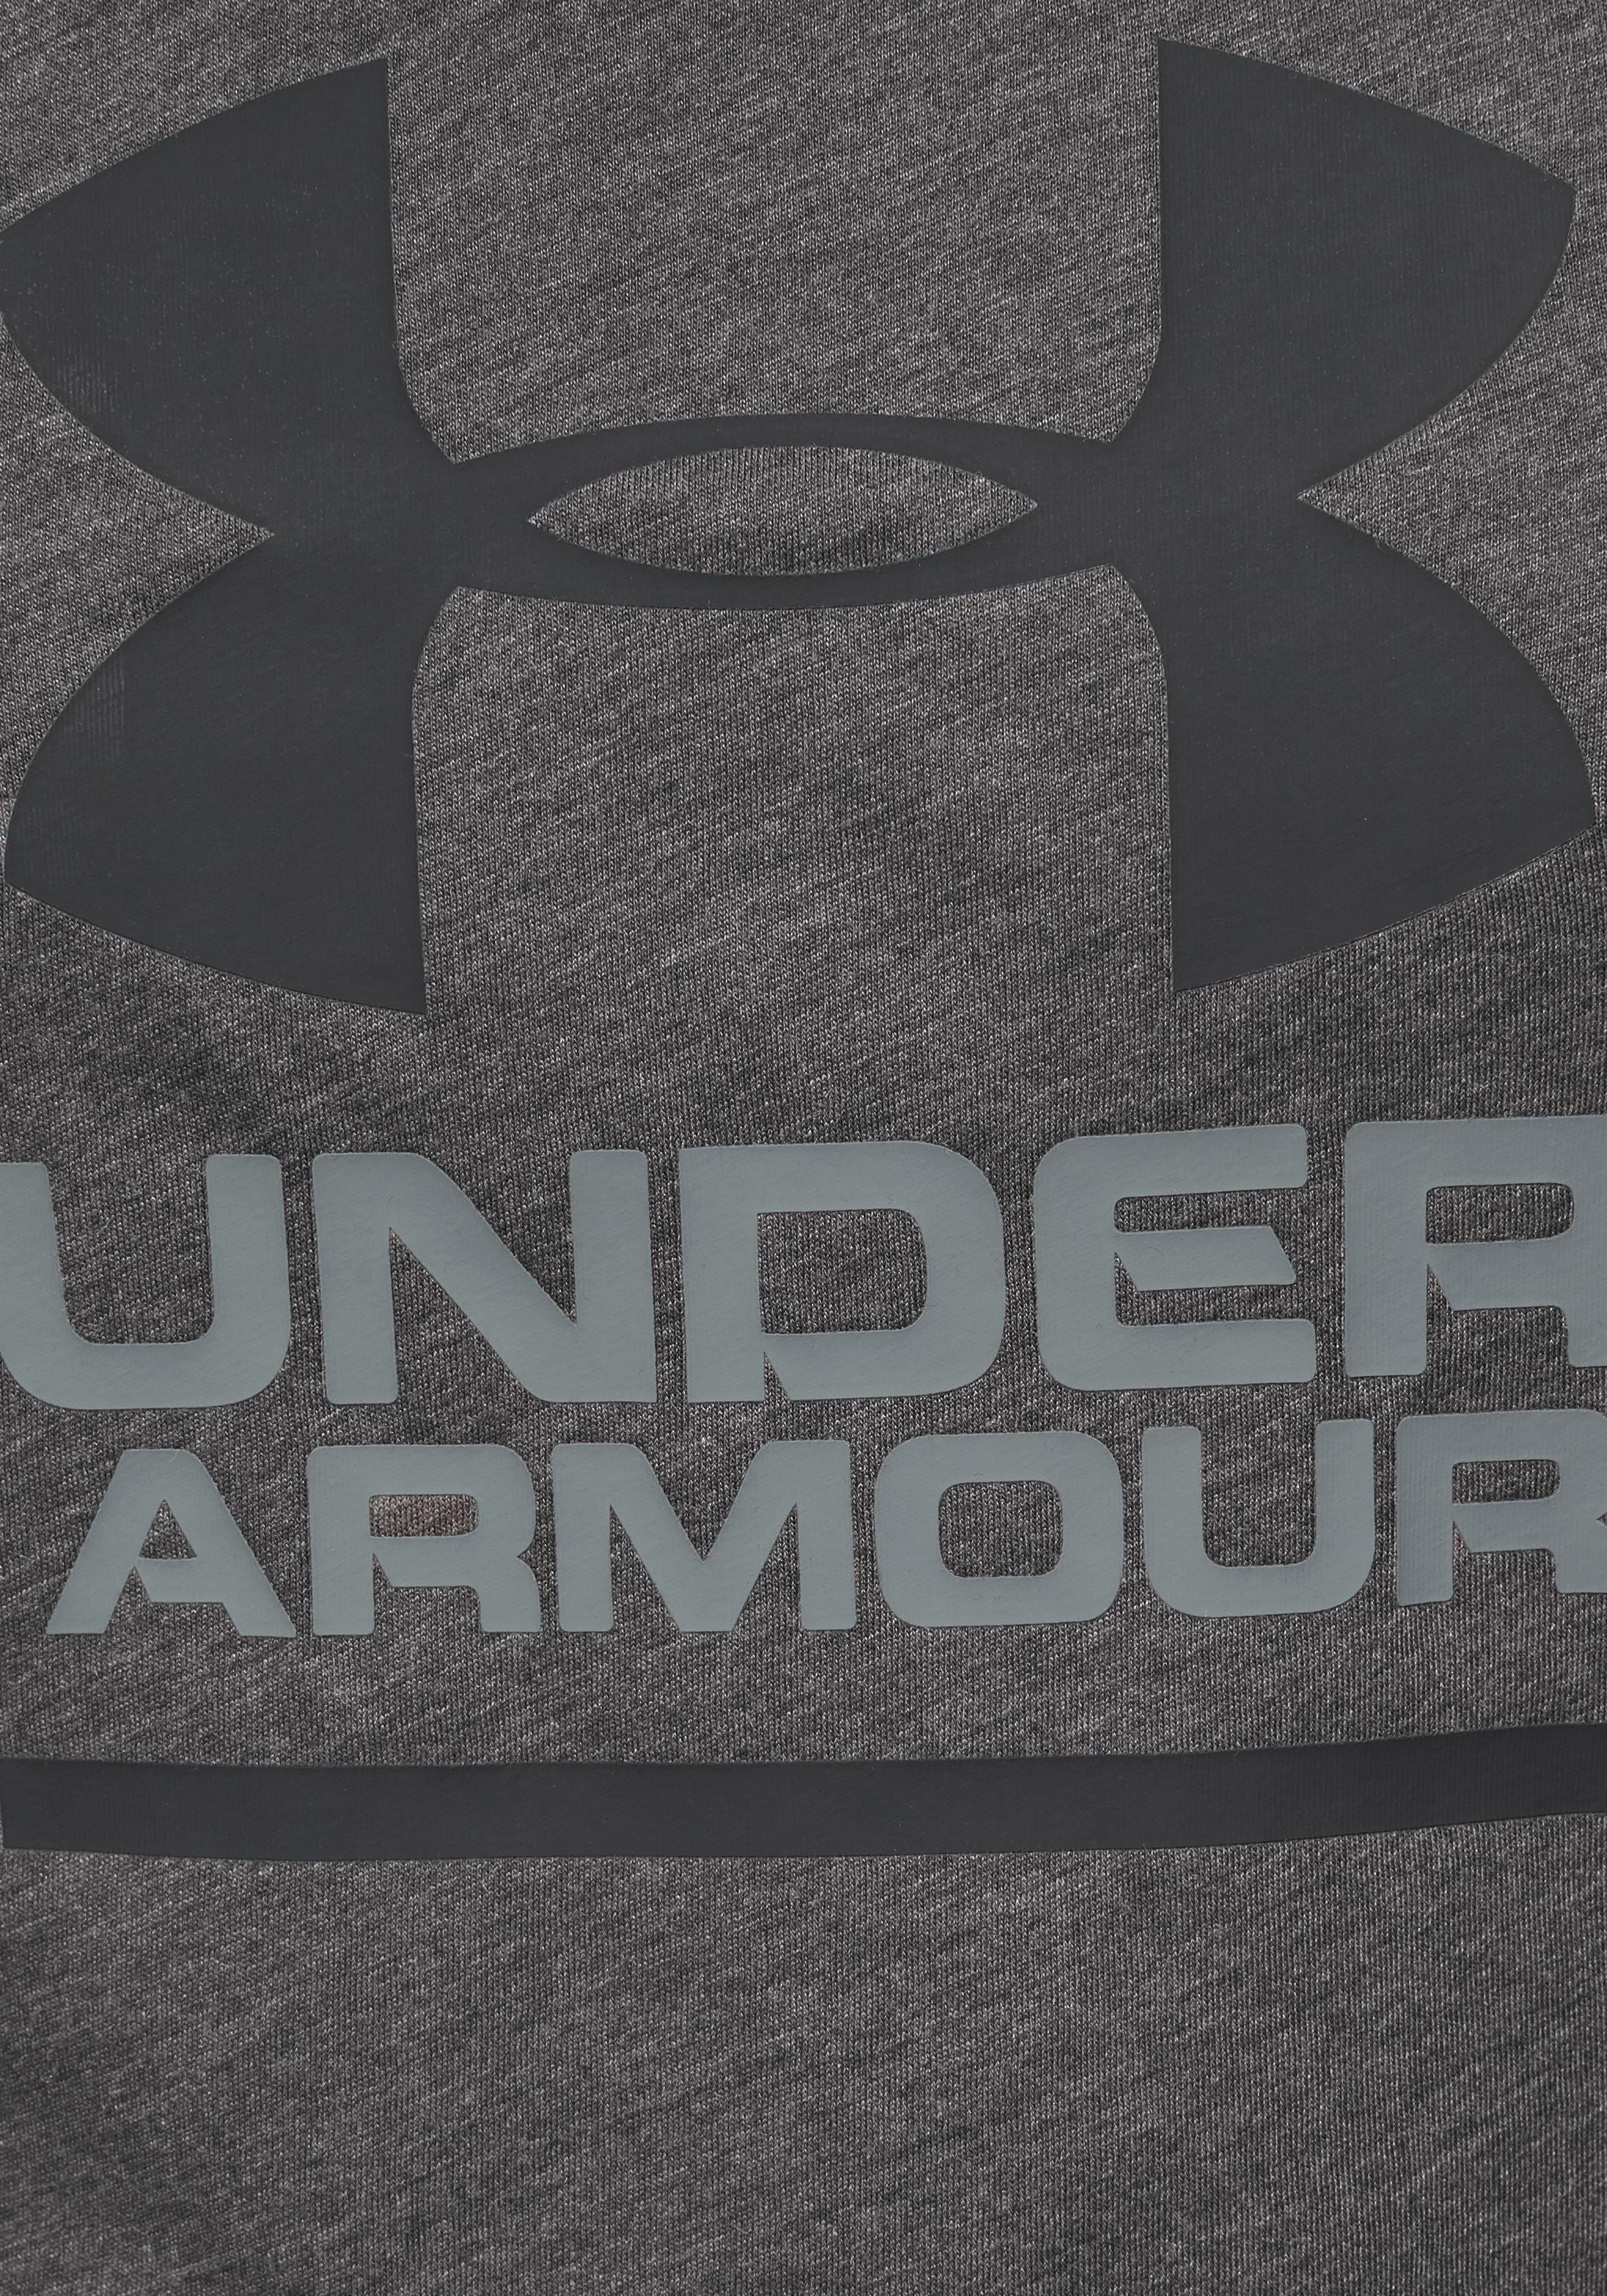 Under Armour® UA GL TEE SHORTSLEEVE T-Shirt FOUNDATION